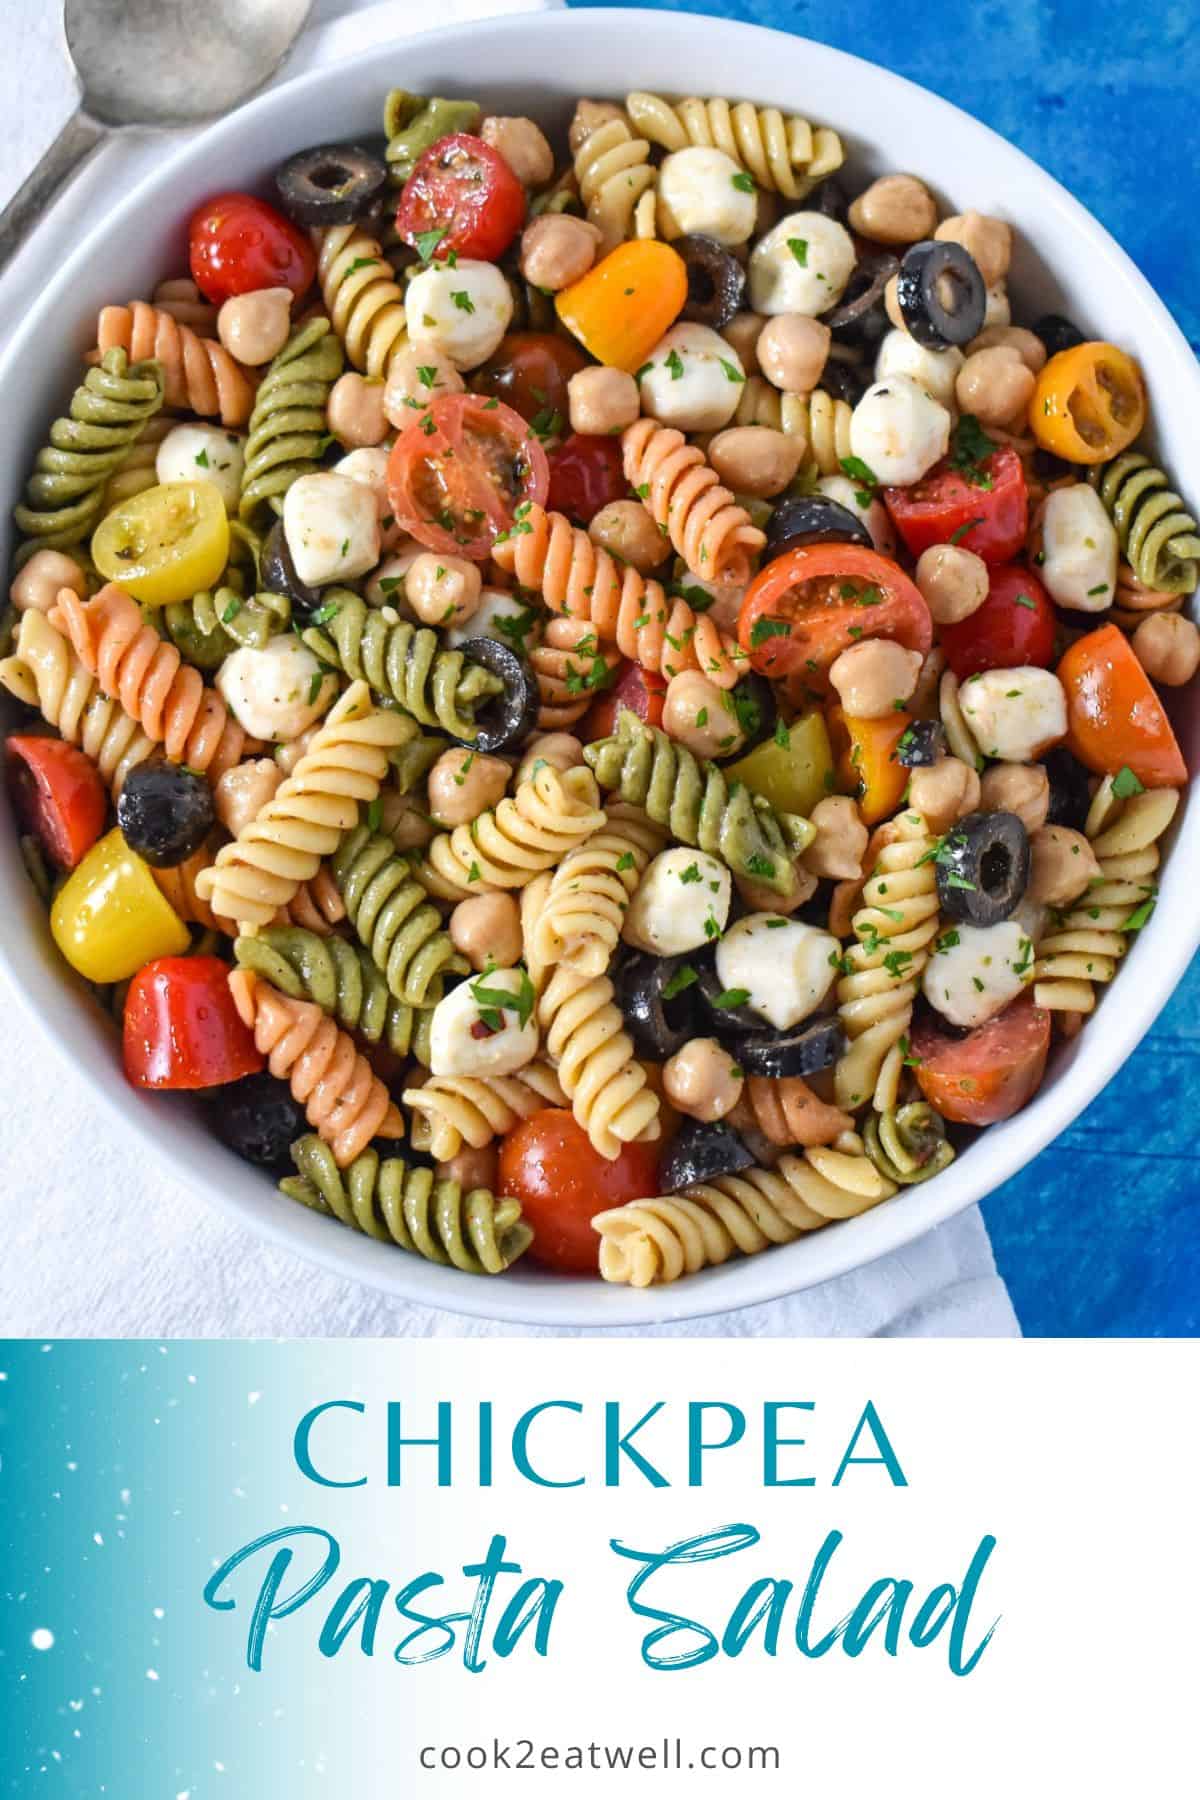 Chickpea Pasta Salad - Cook2eatwell